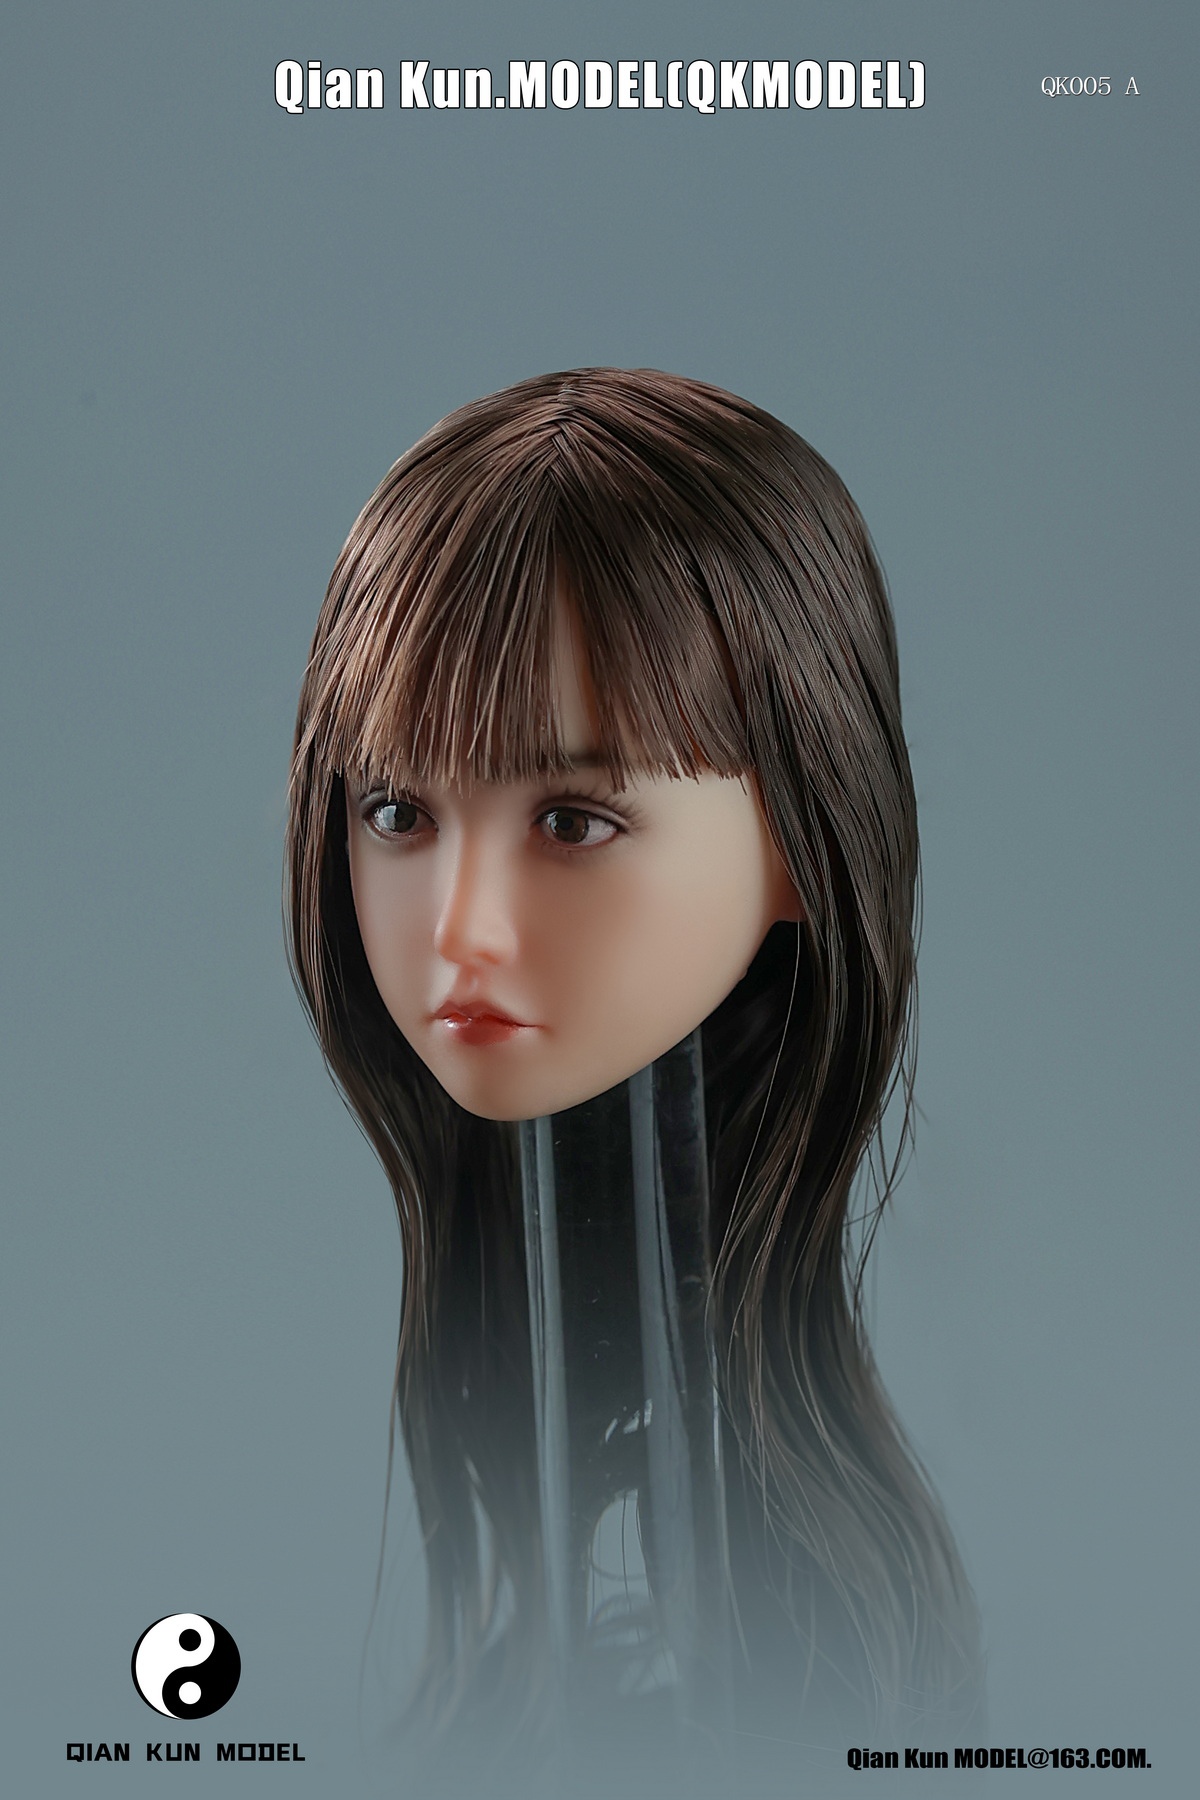 QianKunModel - NEW PRODUCT: Qian Kun.Model - Sweet Asian Female Head Sculpture (QK005-A/B/C) 03100